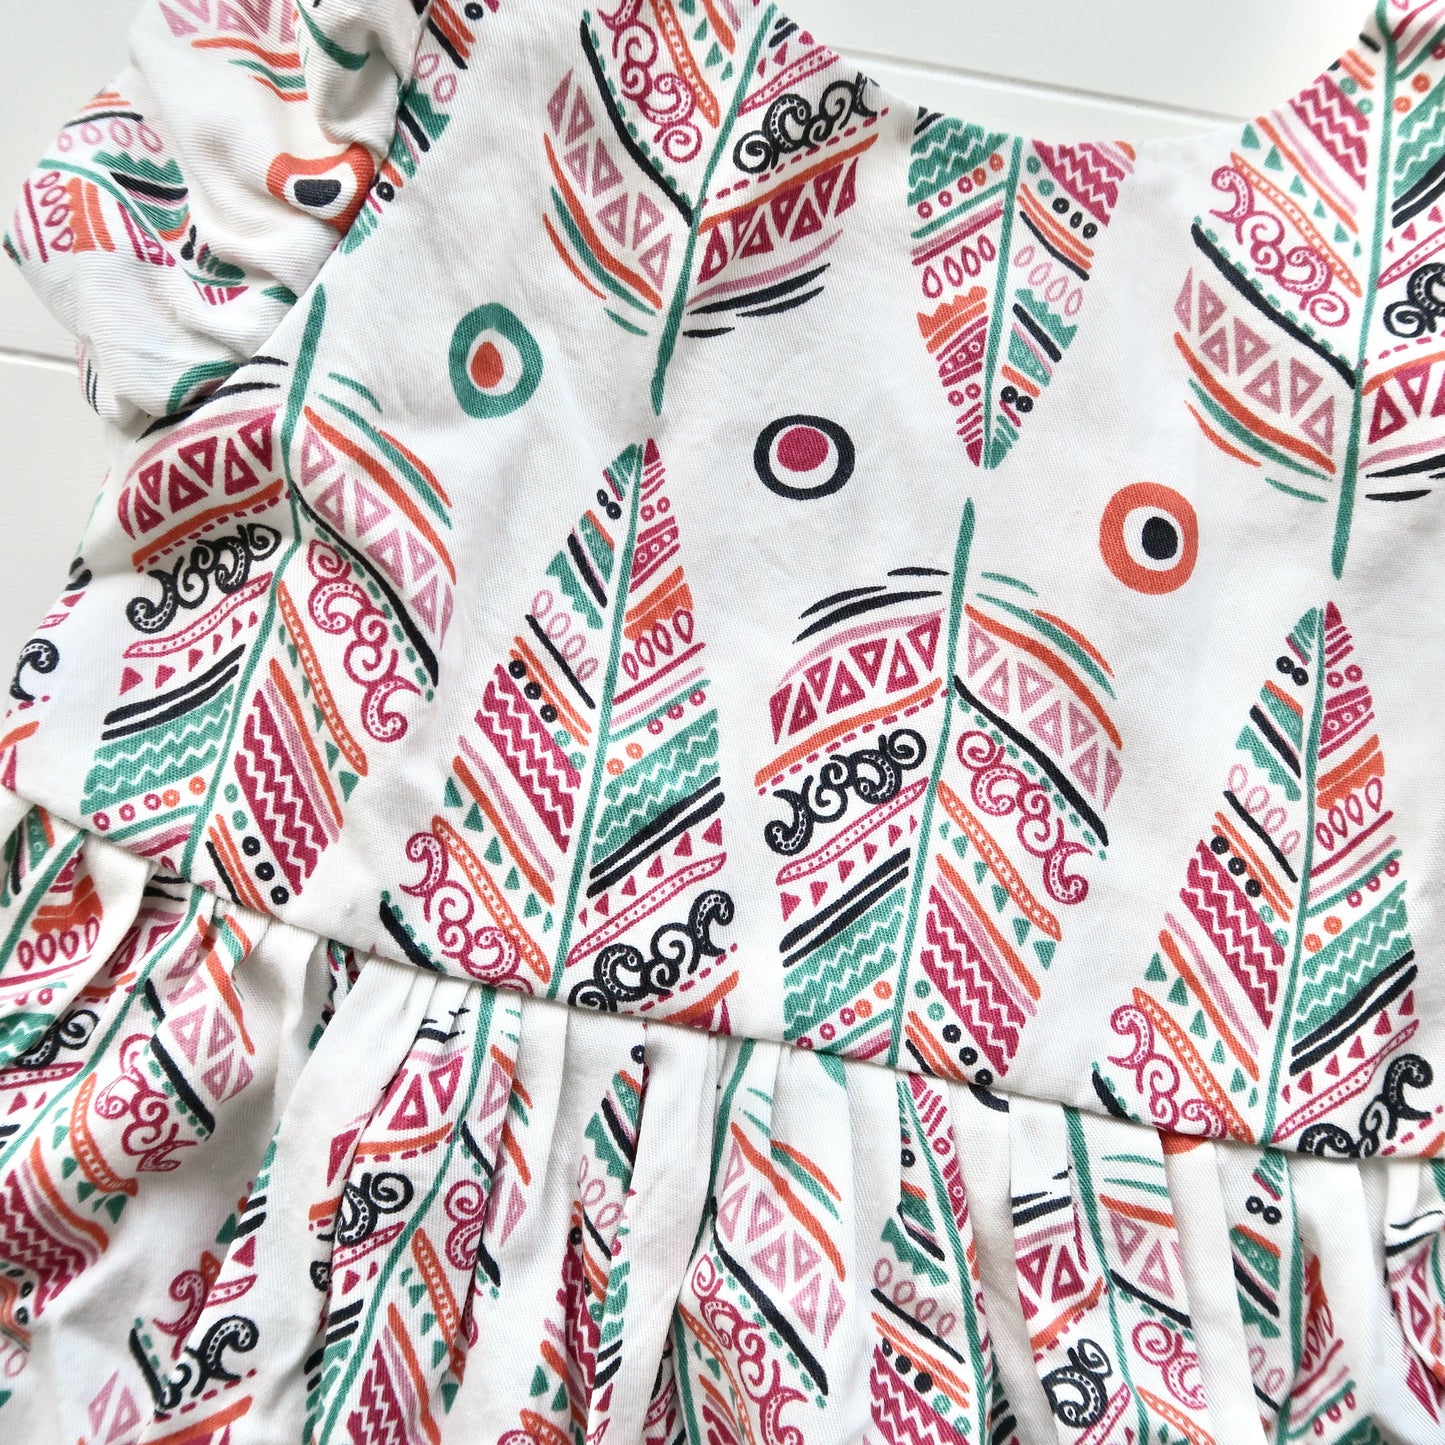 Periwinkle Dress in Vivid Feathers White Print - Lil' Tati